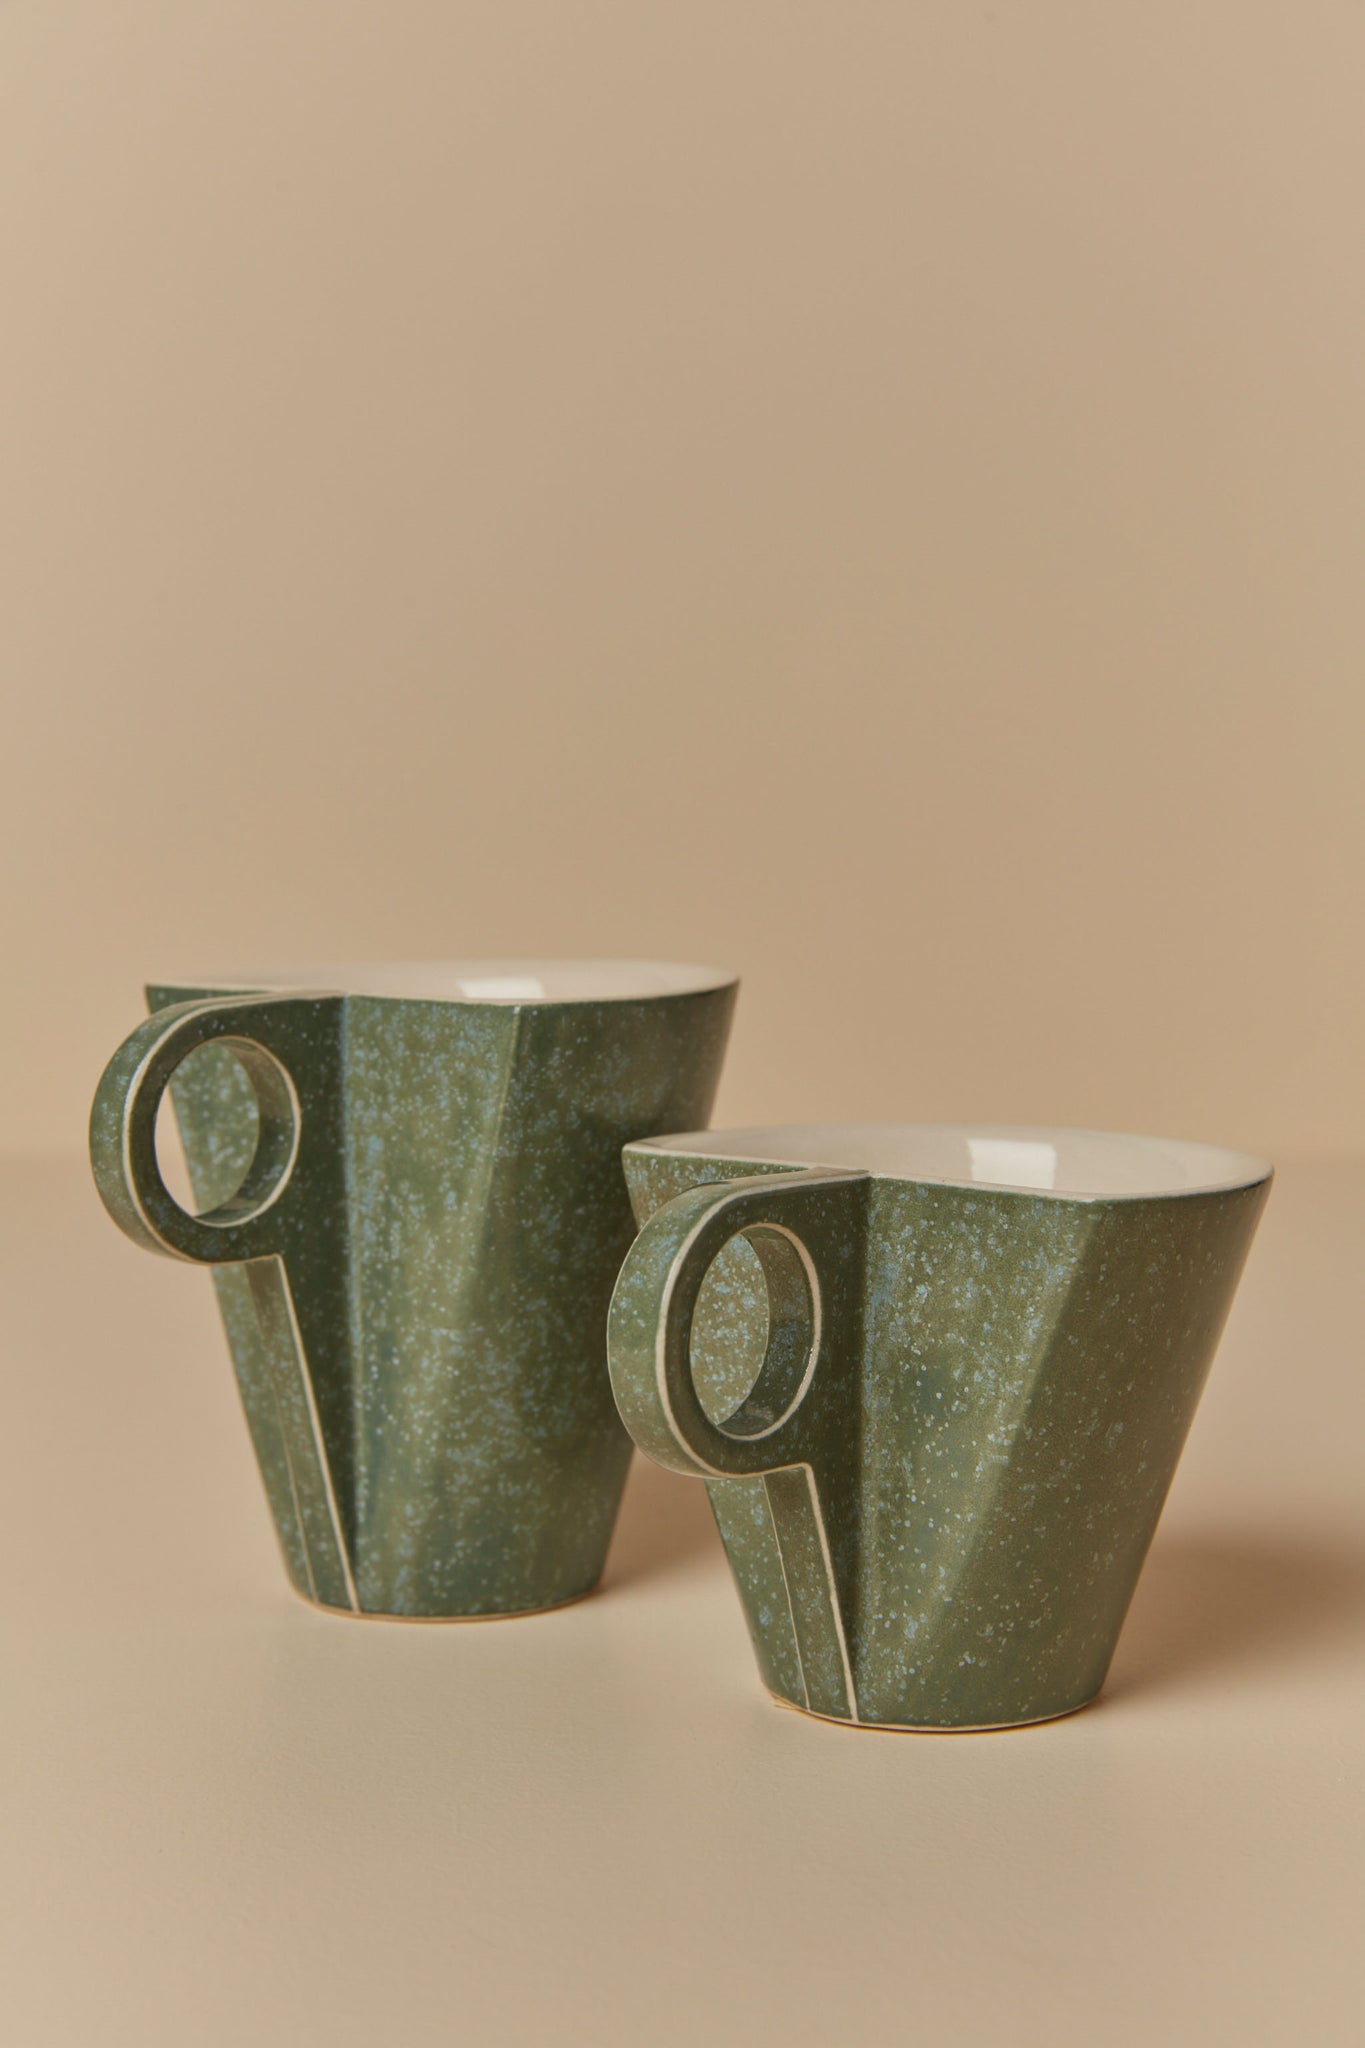 Yuro Cuchor – Large Deco Mug, Speckle Green and Cream